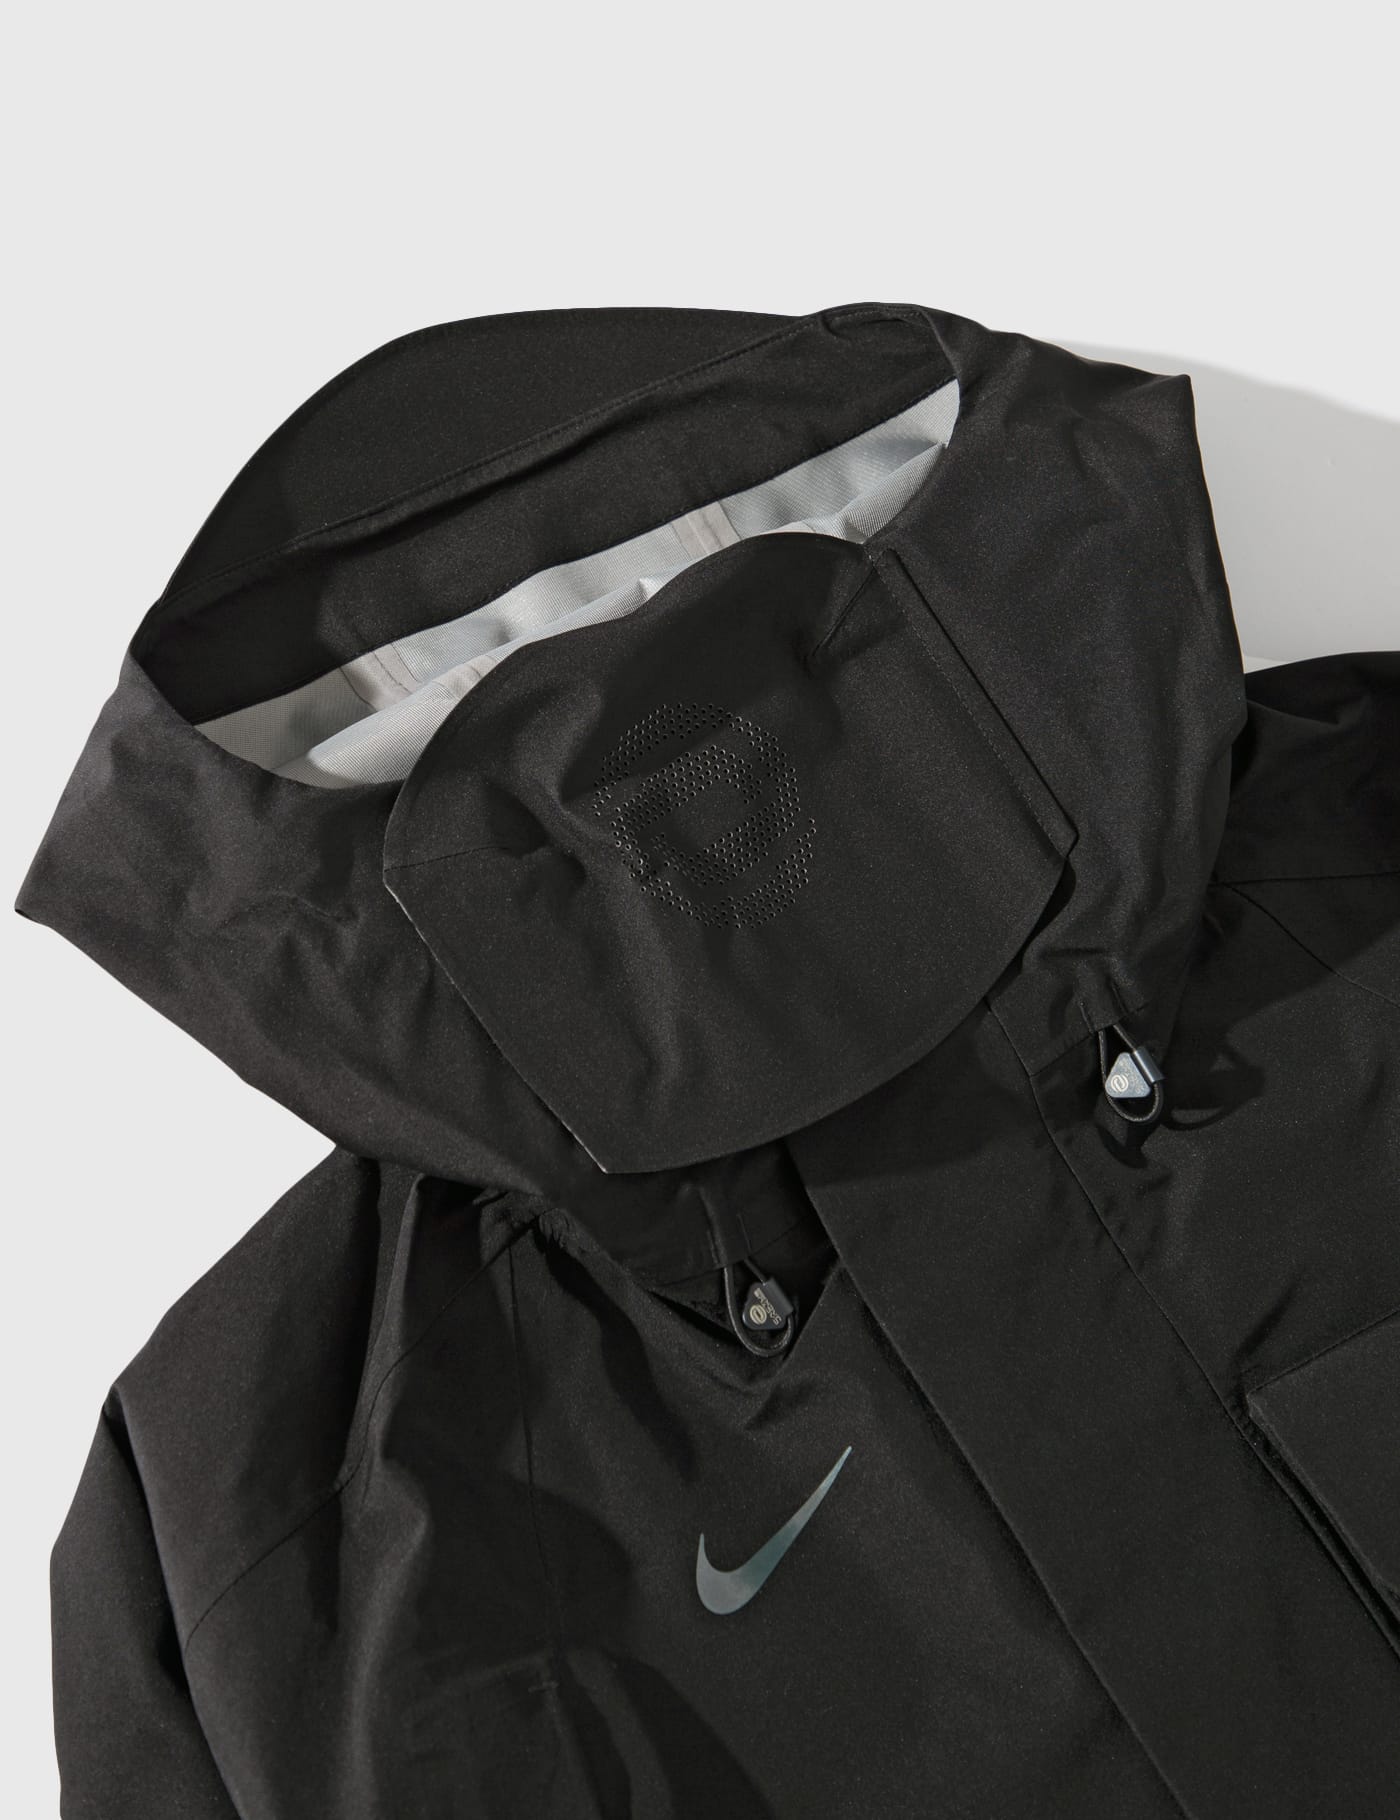 Nike - Nike x Travis Scott Tech Jacket | HBX - Globally Curated